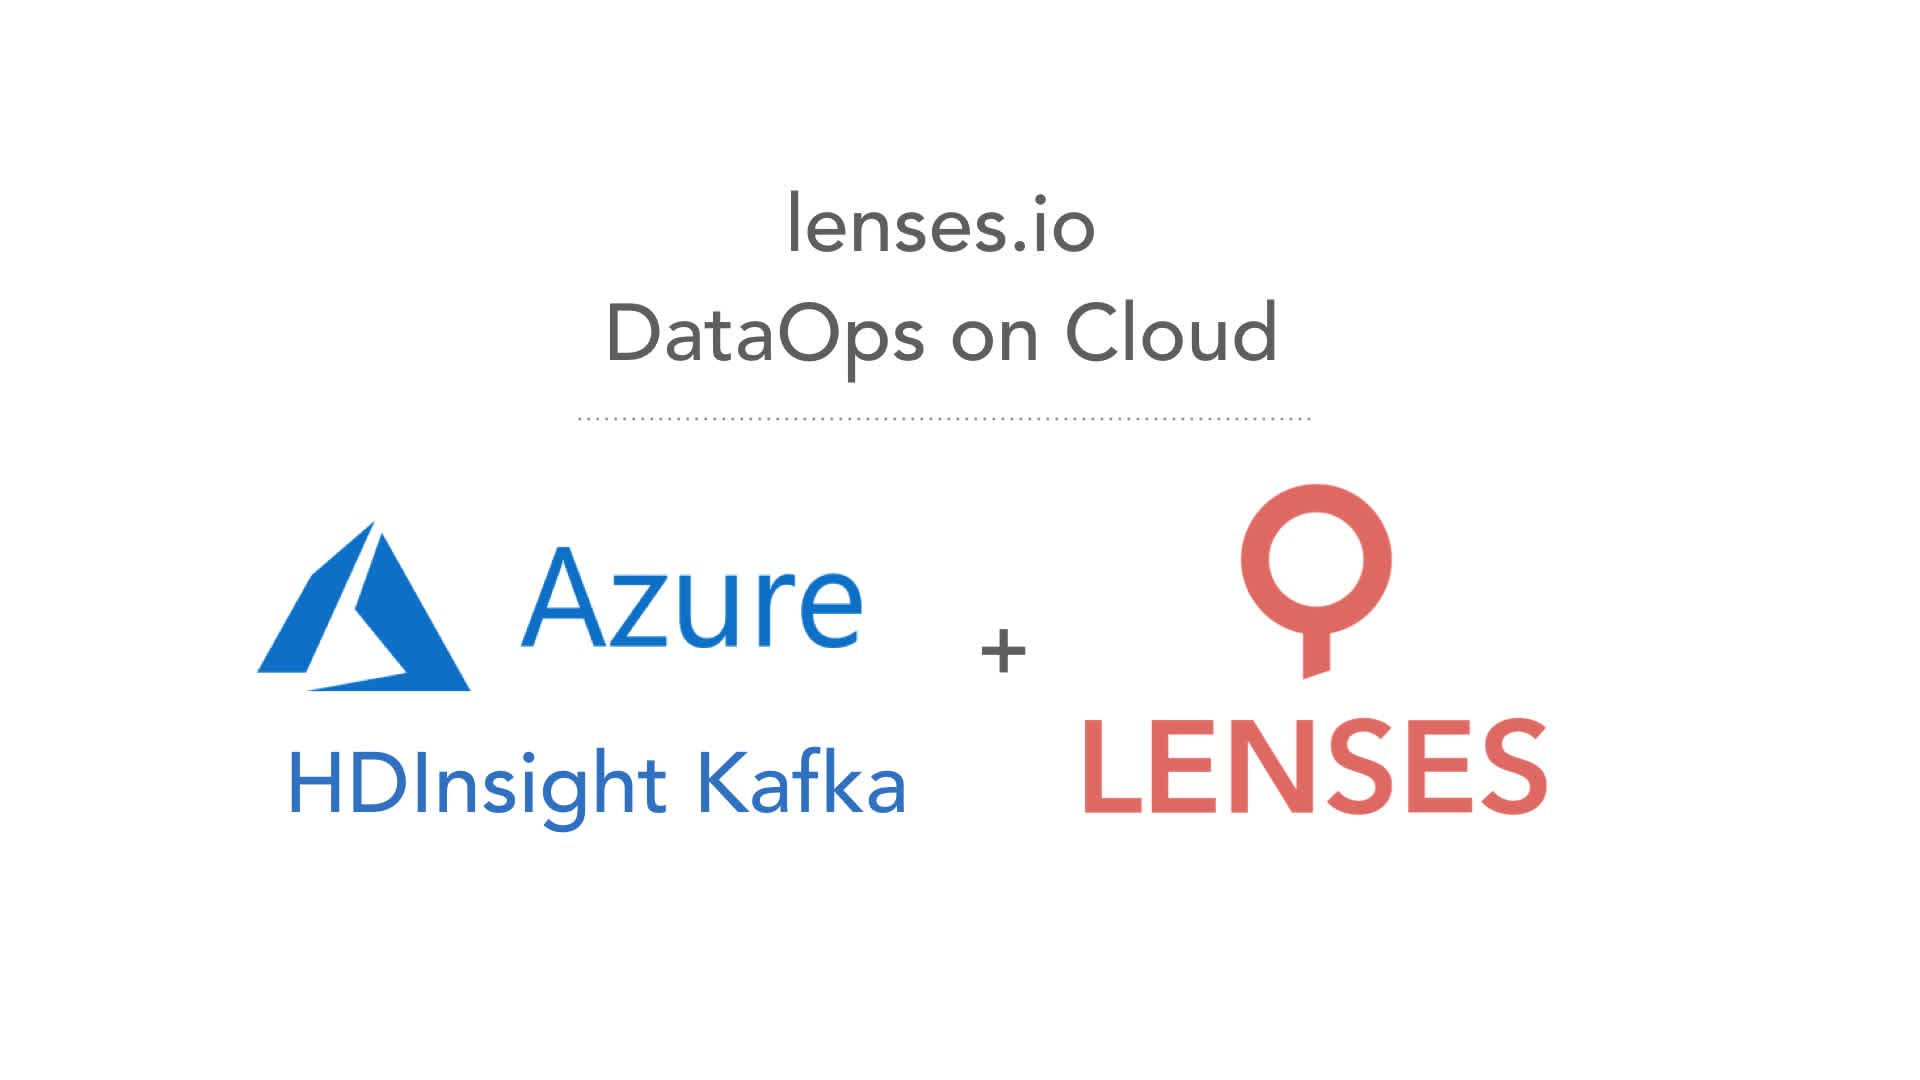 Lenses.io enables DataOps over Microsoft's Azure